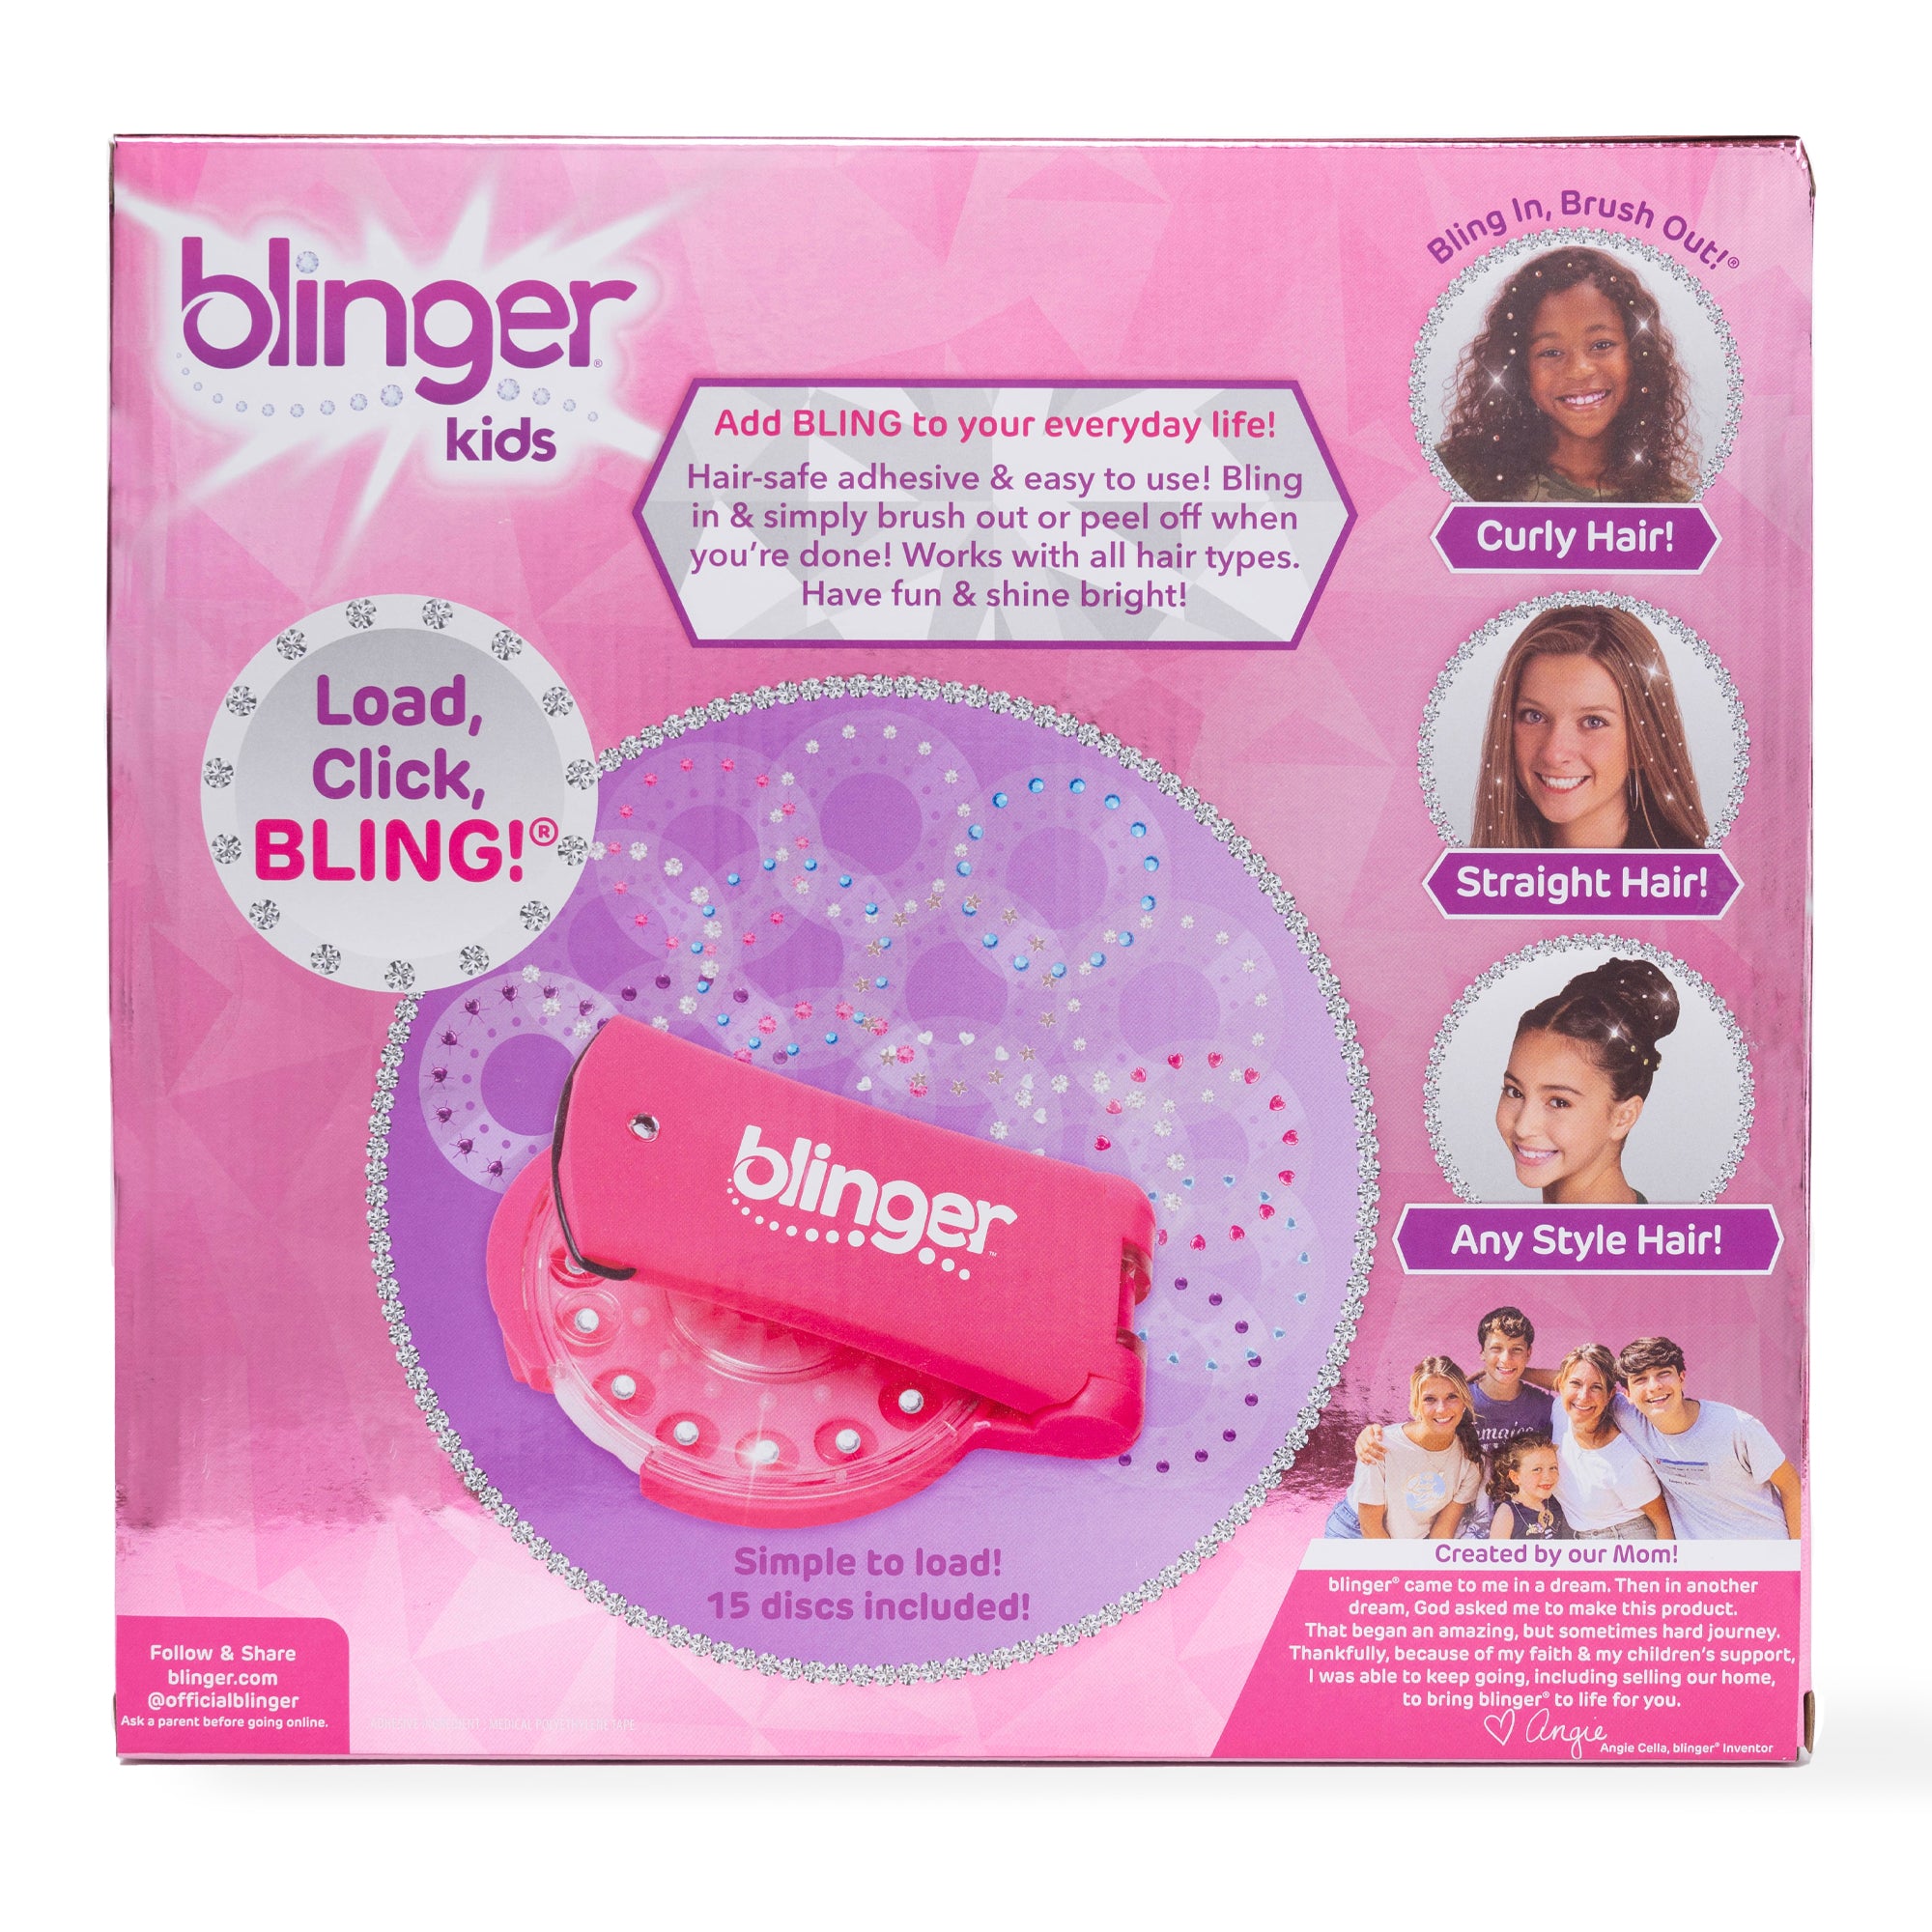 blinger® Glam Collection Starter Kit with blinger® Gem Stamper + 225 Colorful Acrylic Rhinestones